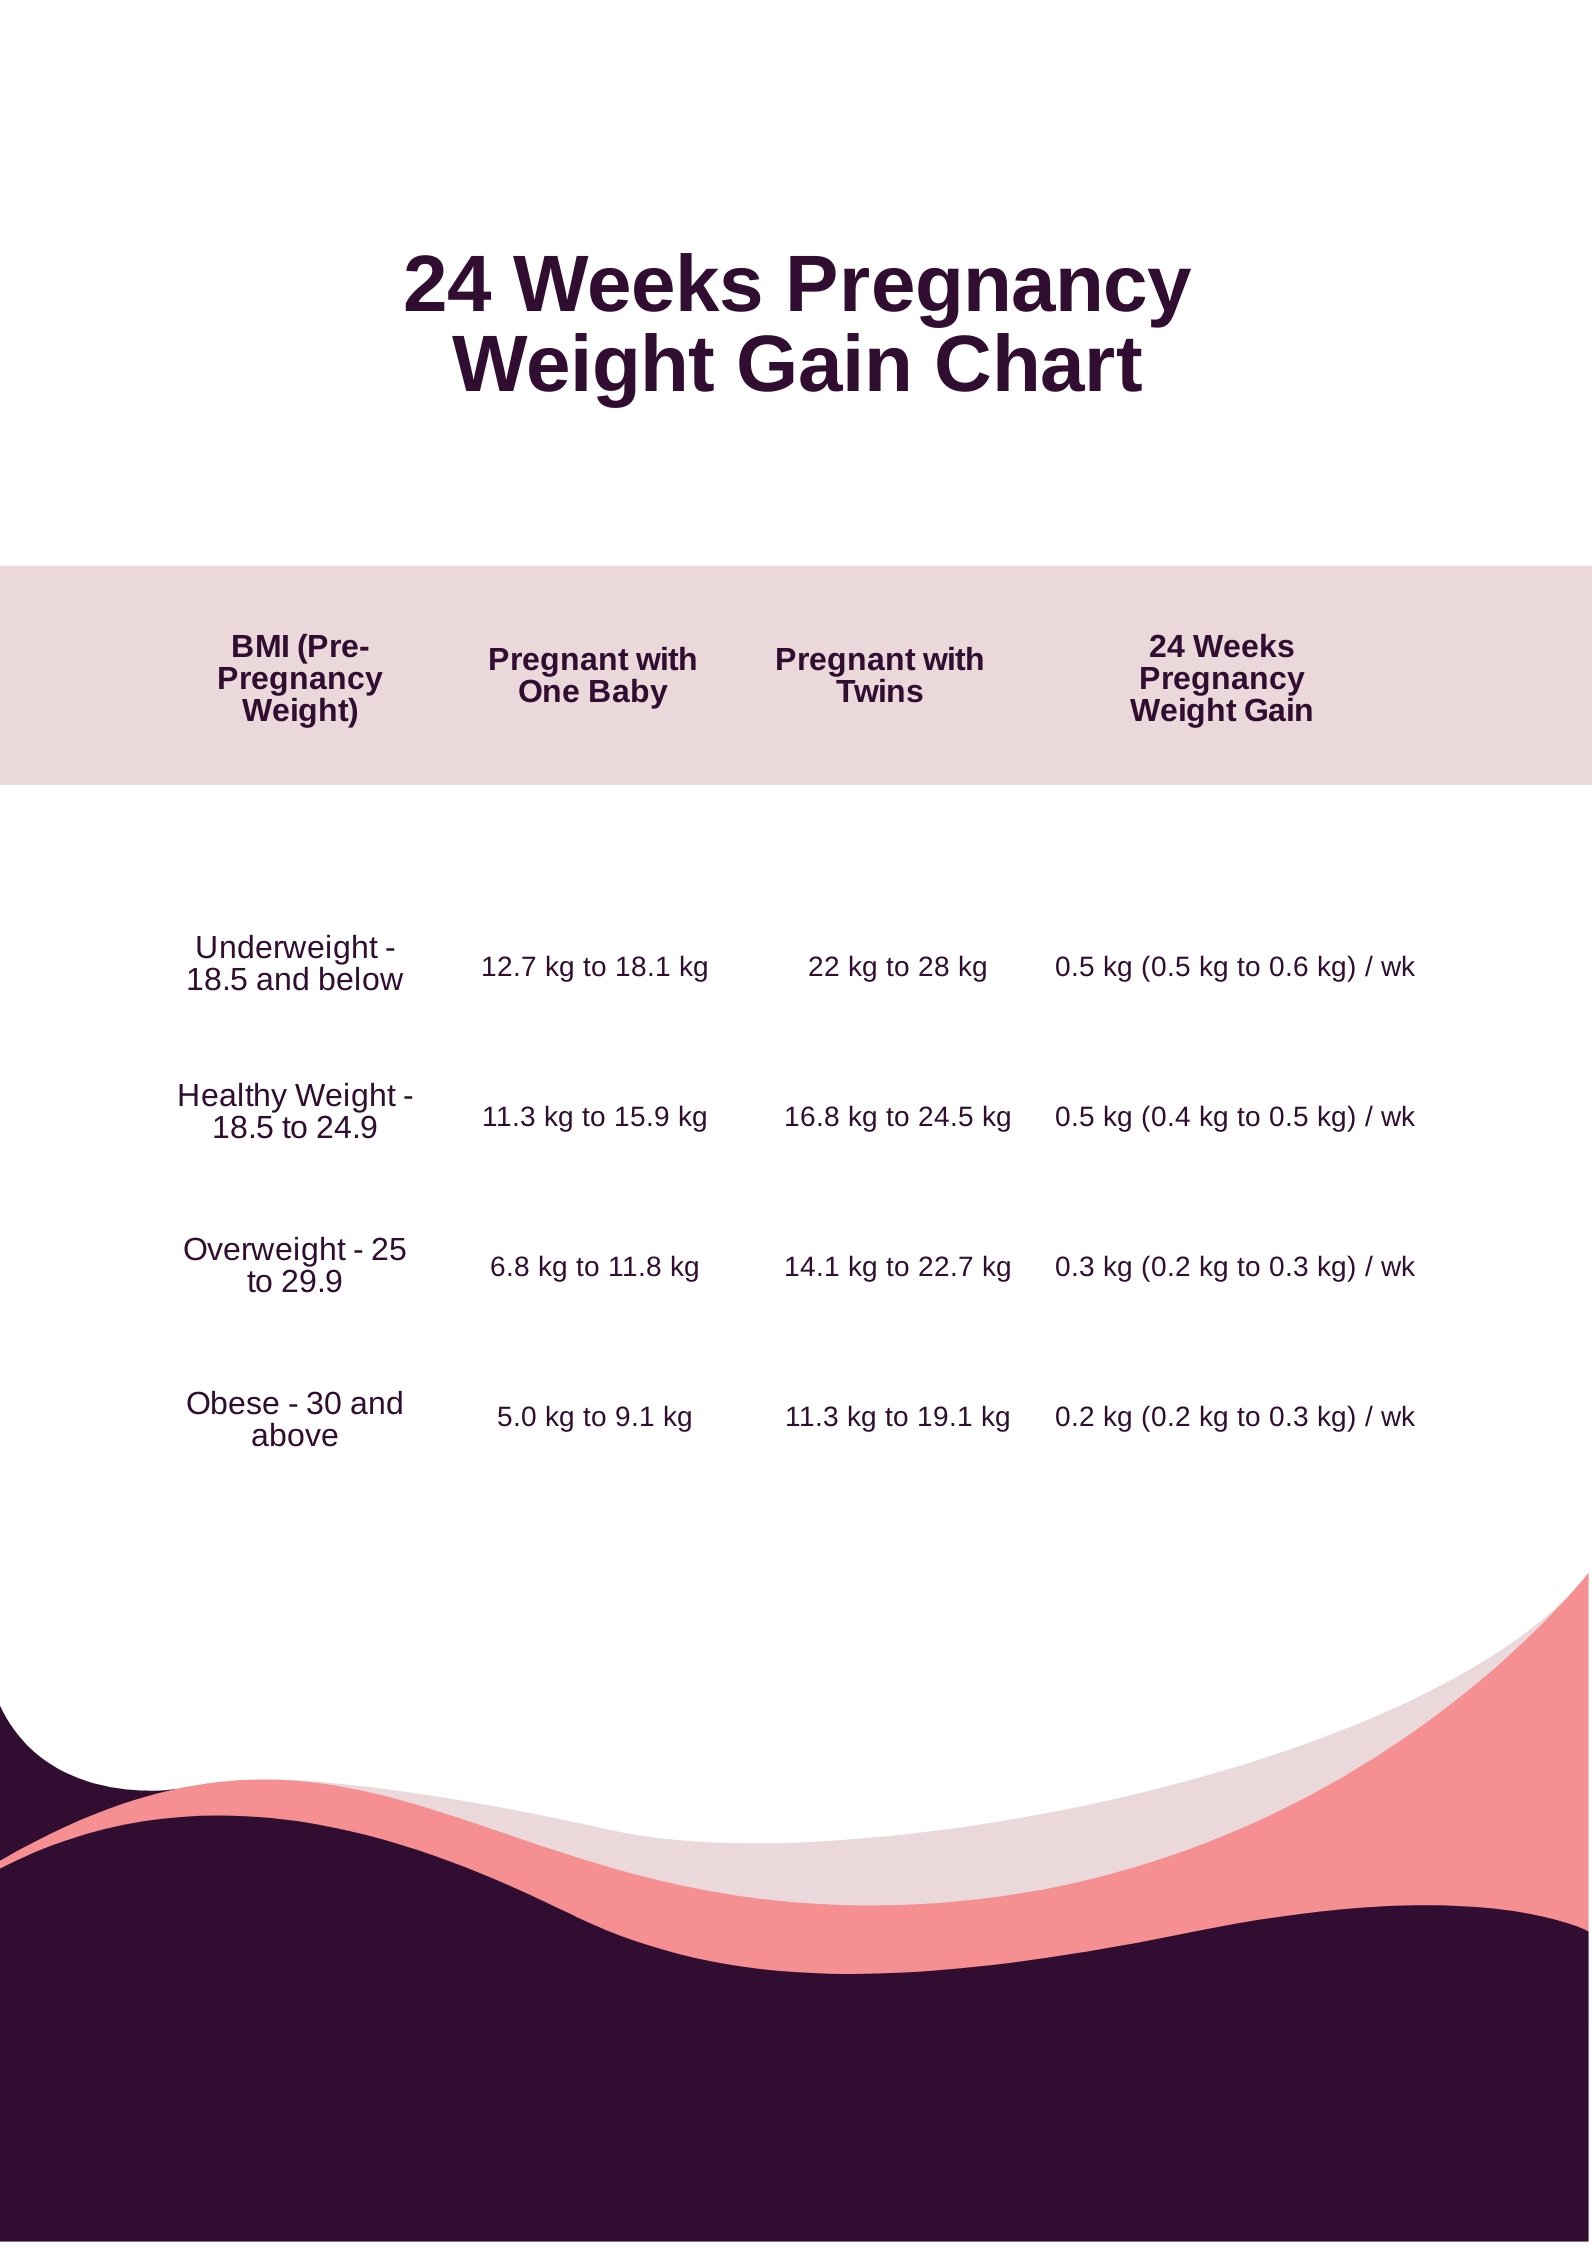 24 Weeks Pregnancy Weight Gain Chart in PDF